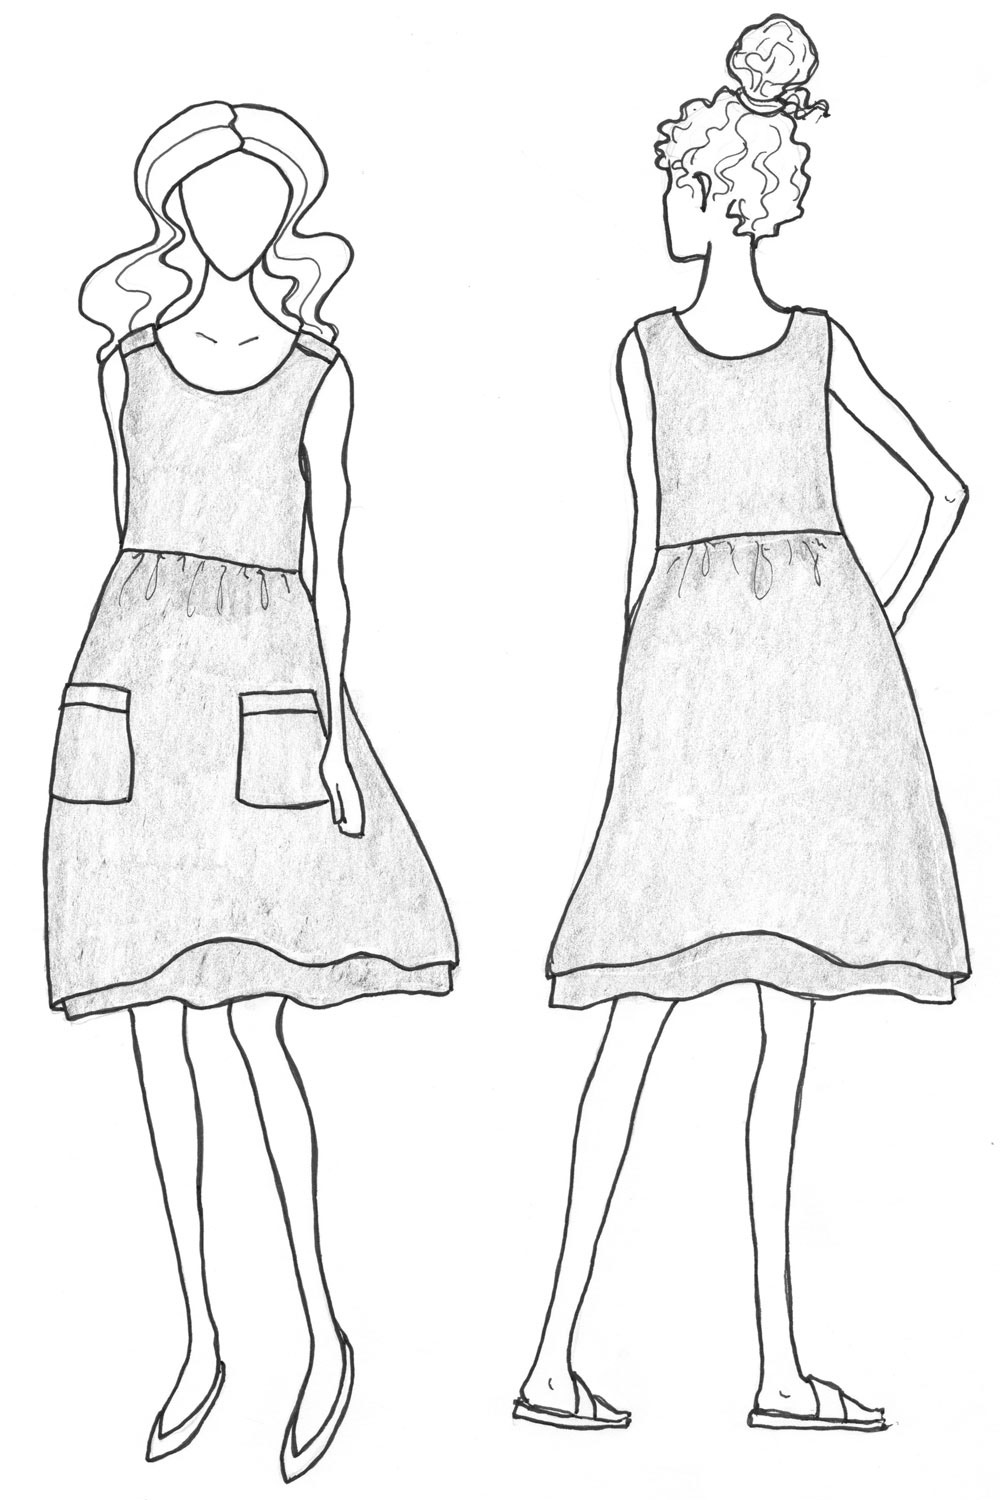 Croquis drawings of the metamorphic dress